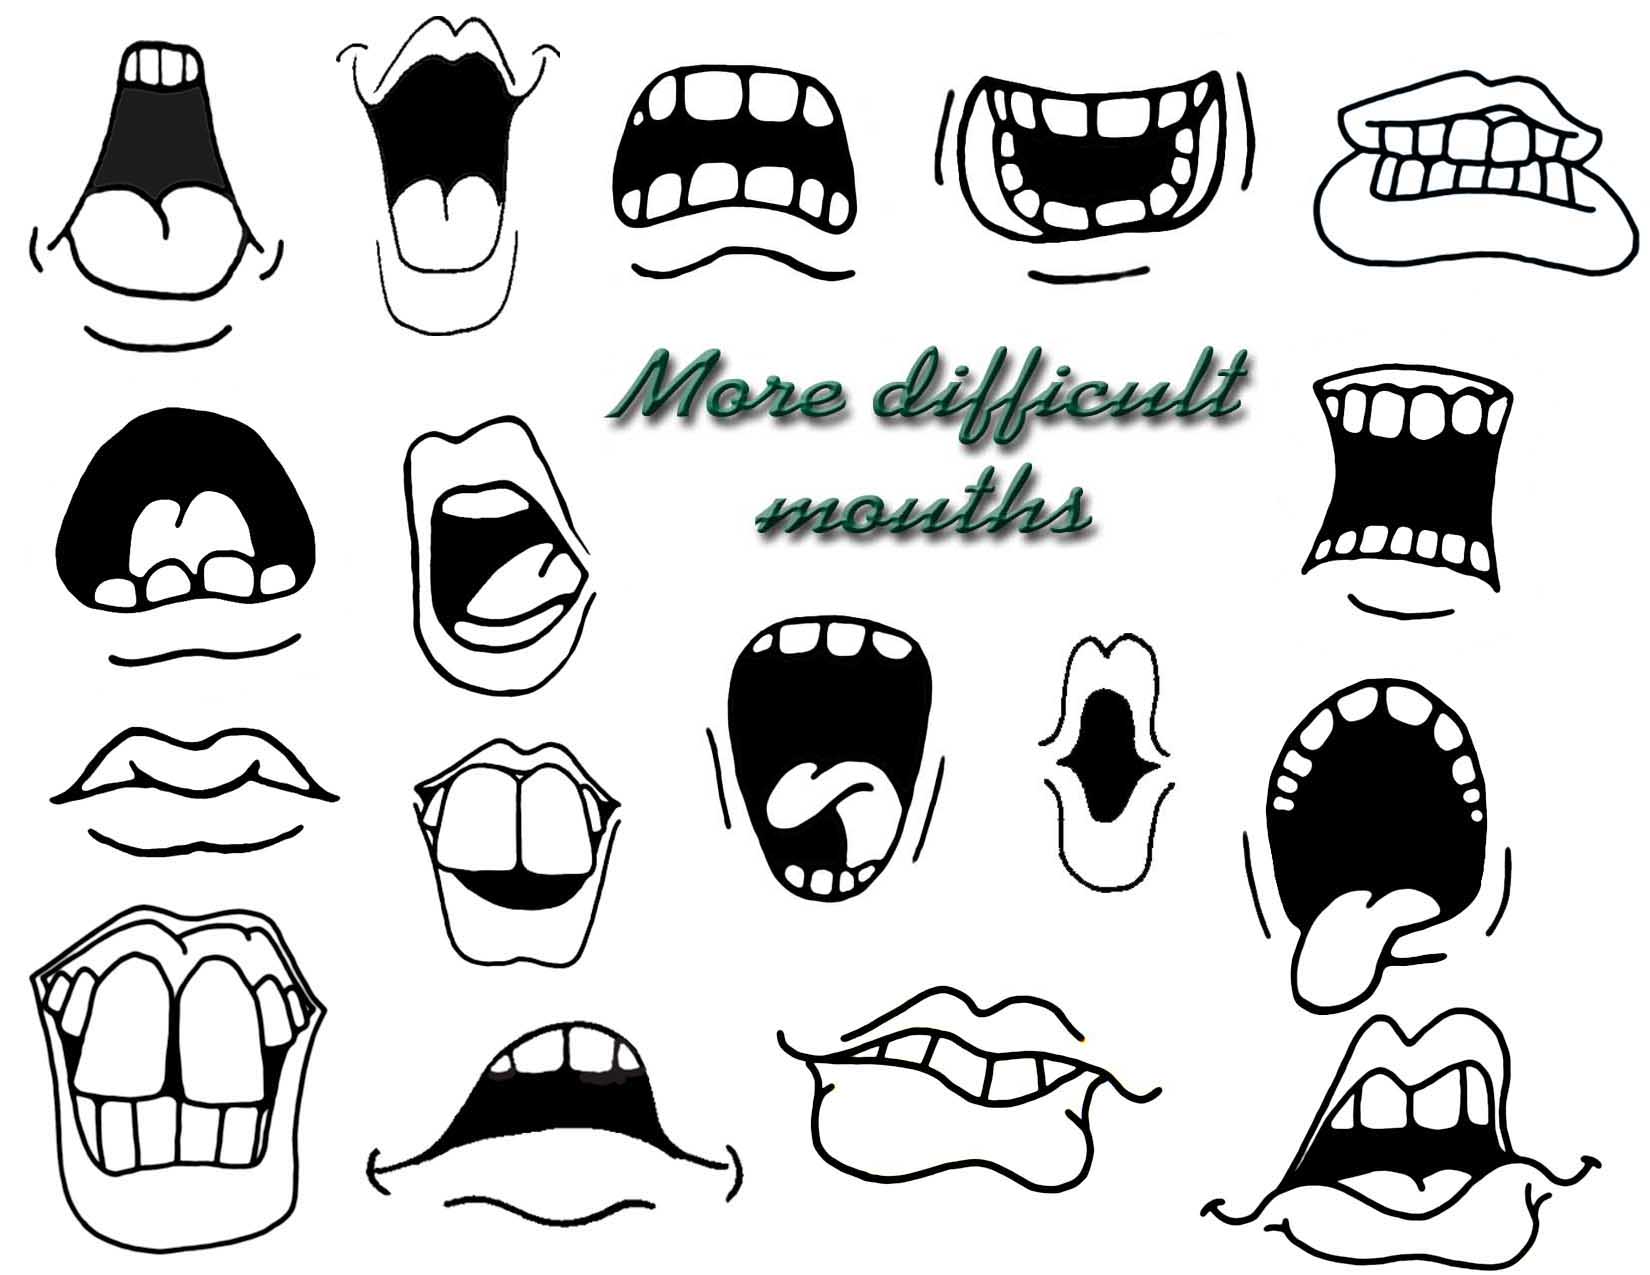 mouths 2